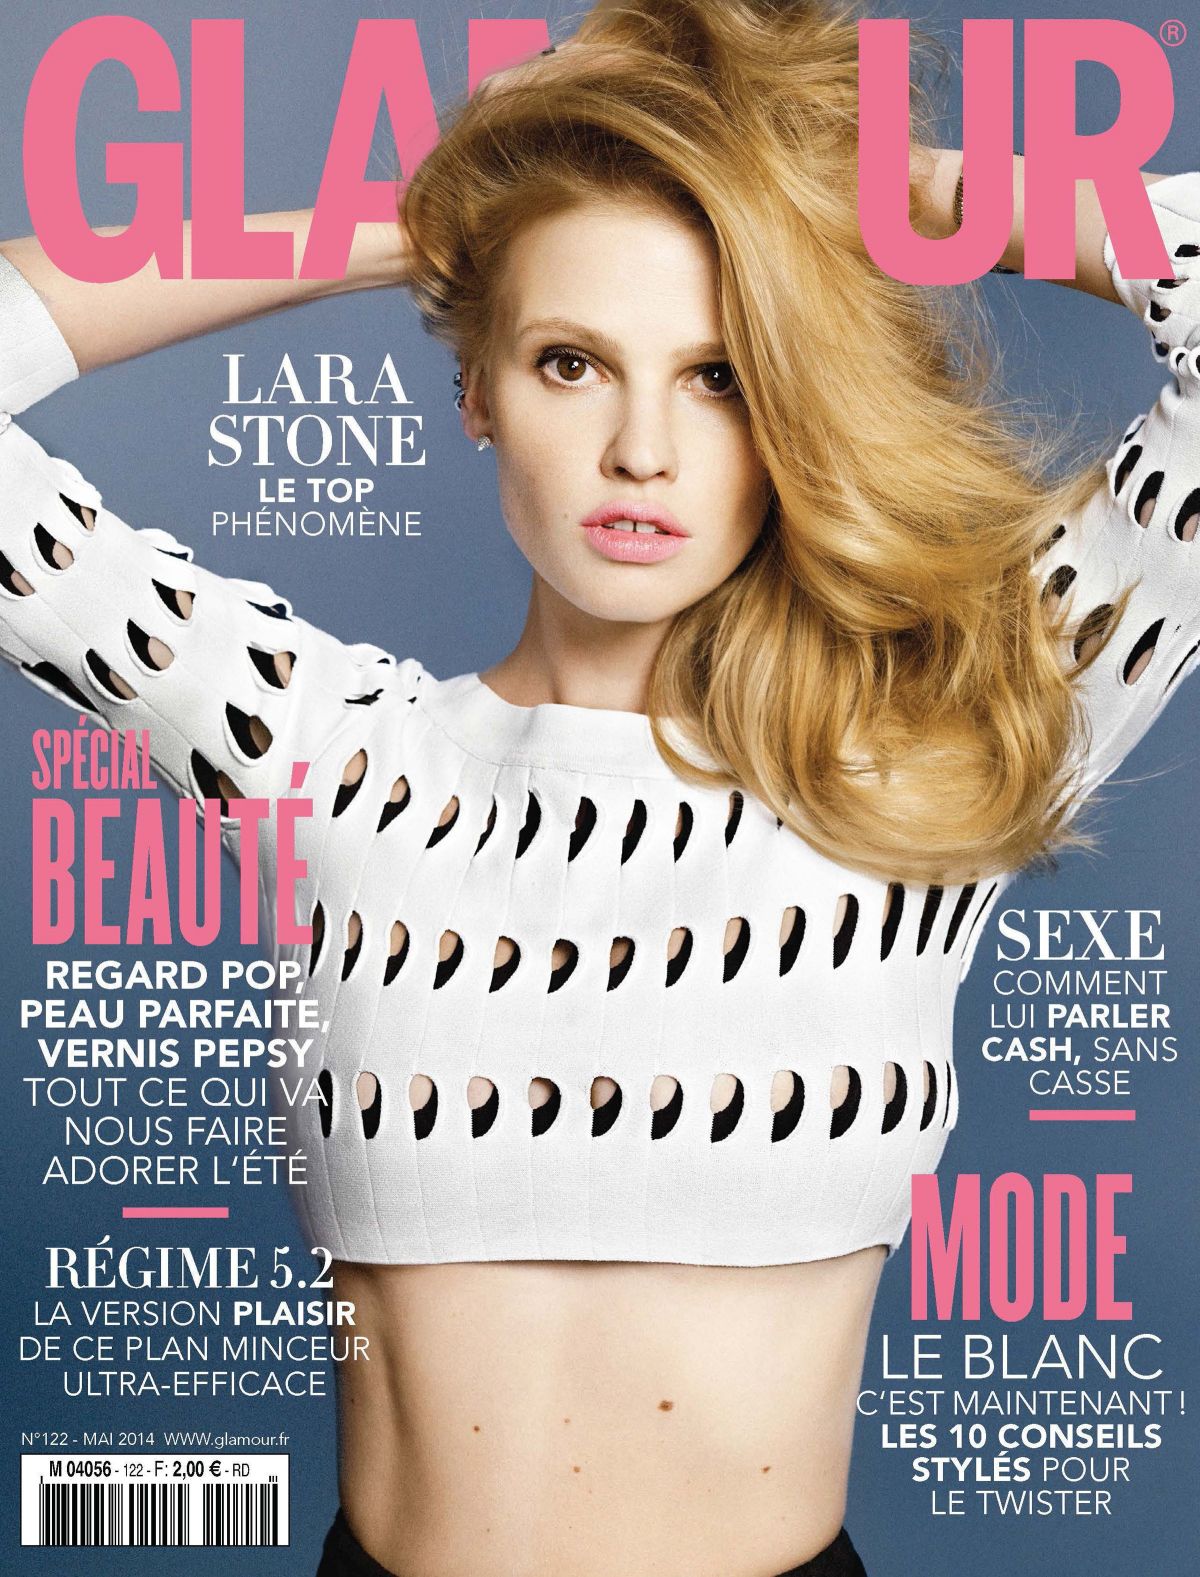 LARA STONE in Glamour Magazine, France May 2014 Issue - HawtCelebs